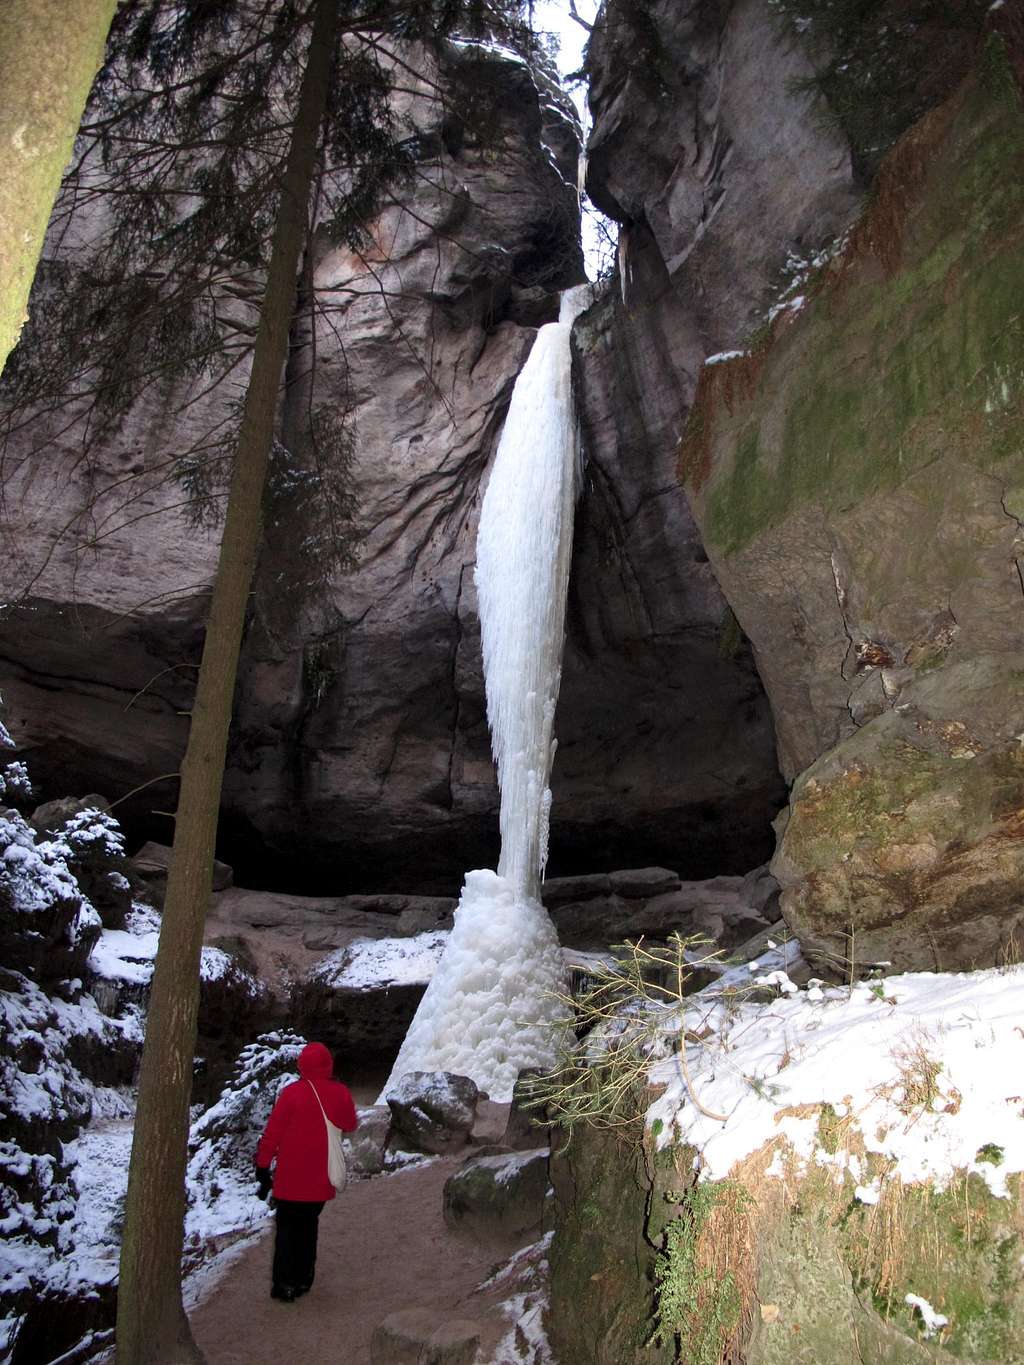 The Gautschgrotte with it's 22-meter frozen waterfall